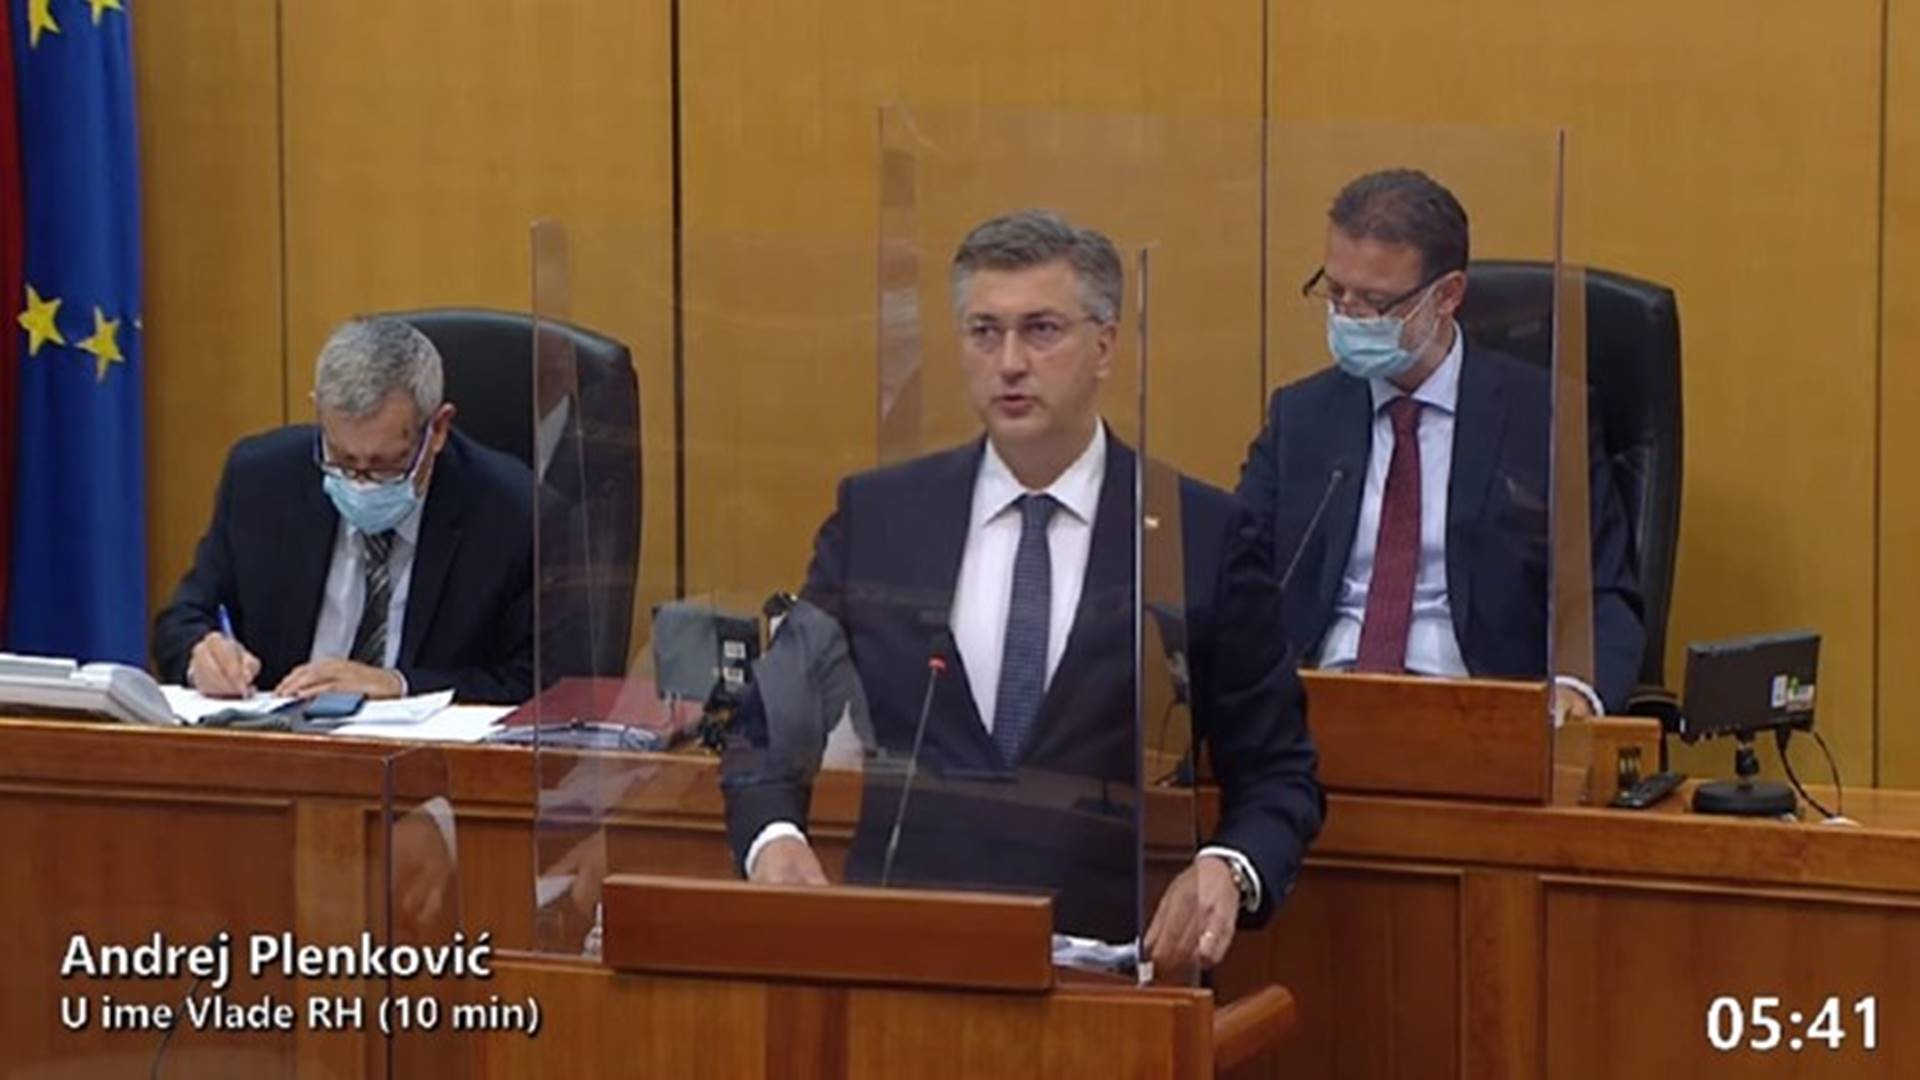 Andrej Plenković u saboru branio Vili Beroša i svađao se s oporbom